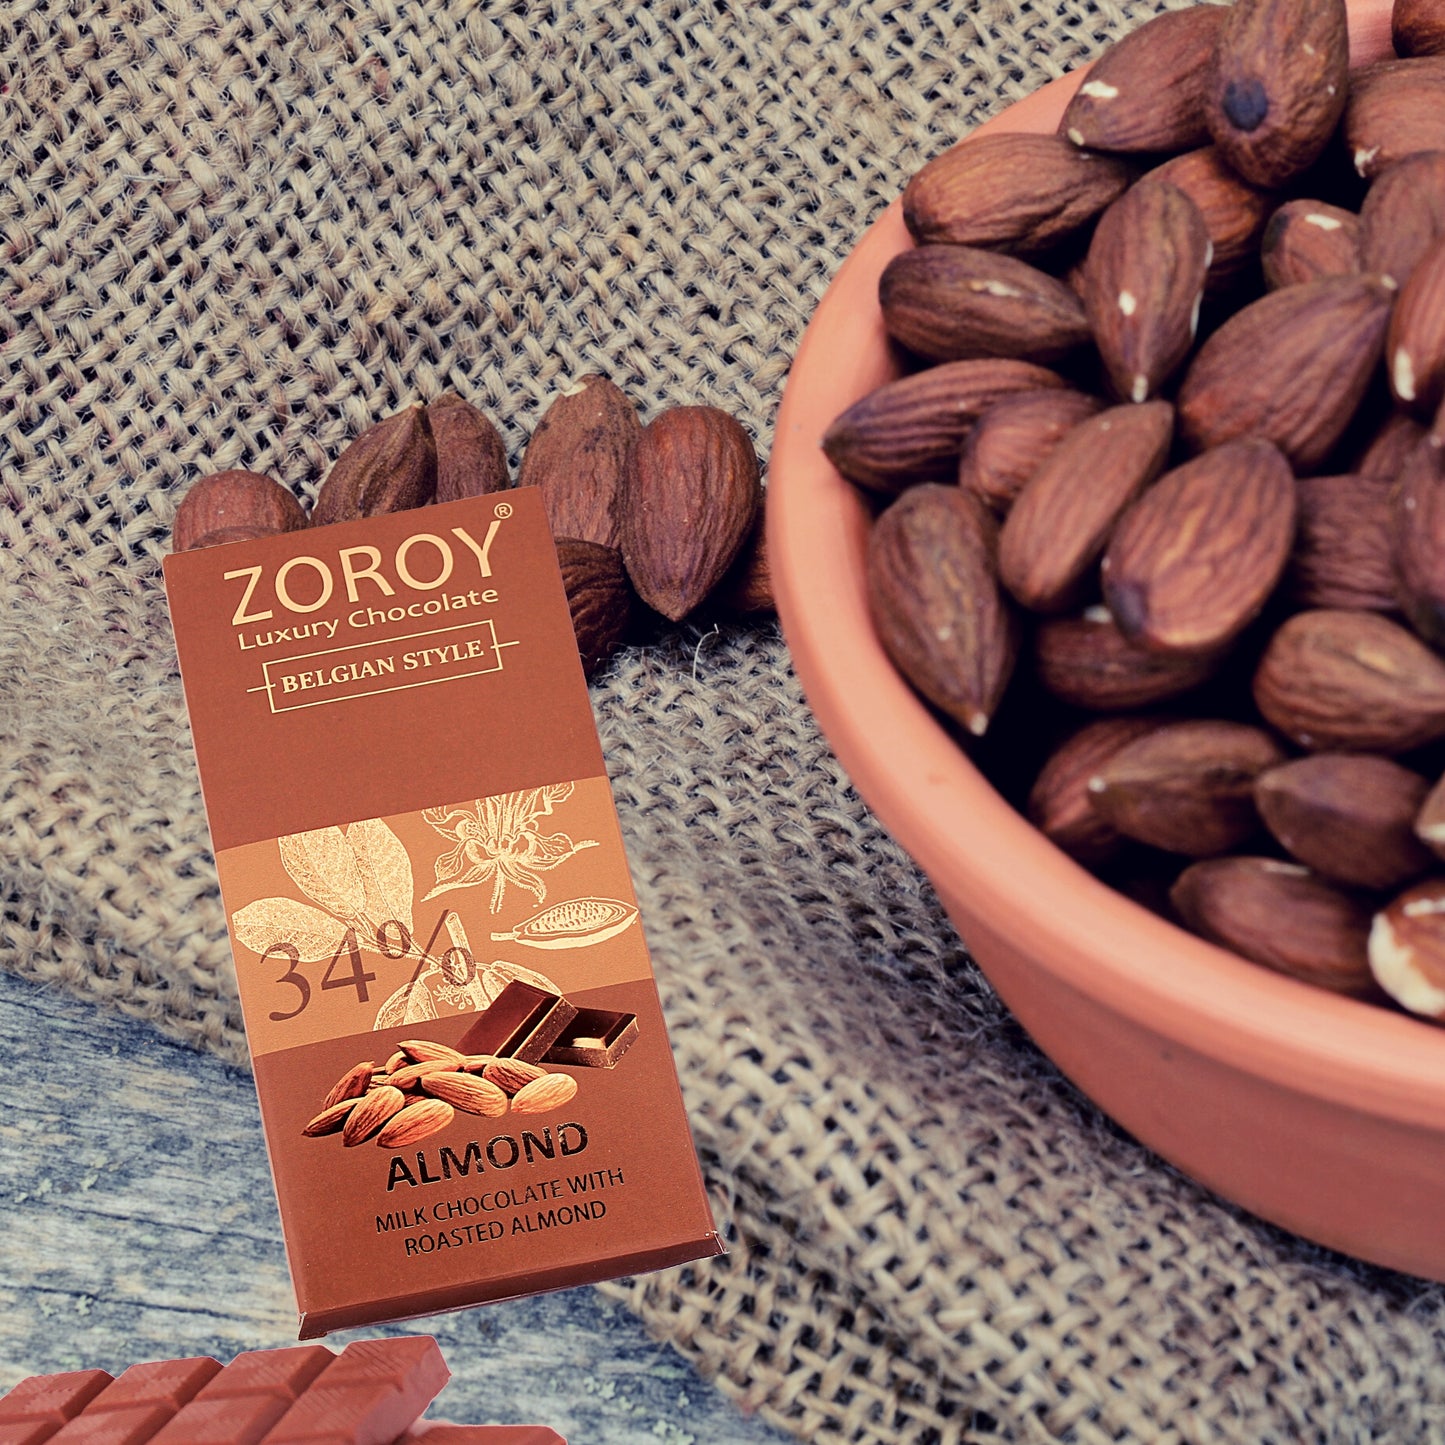 ZOROY LUXURY CHOCOLATE 100% Couverture Milk chocolate Almond bar | Signature Belgian style chocolate | Almond chocolate | 100 grams